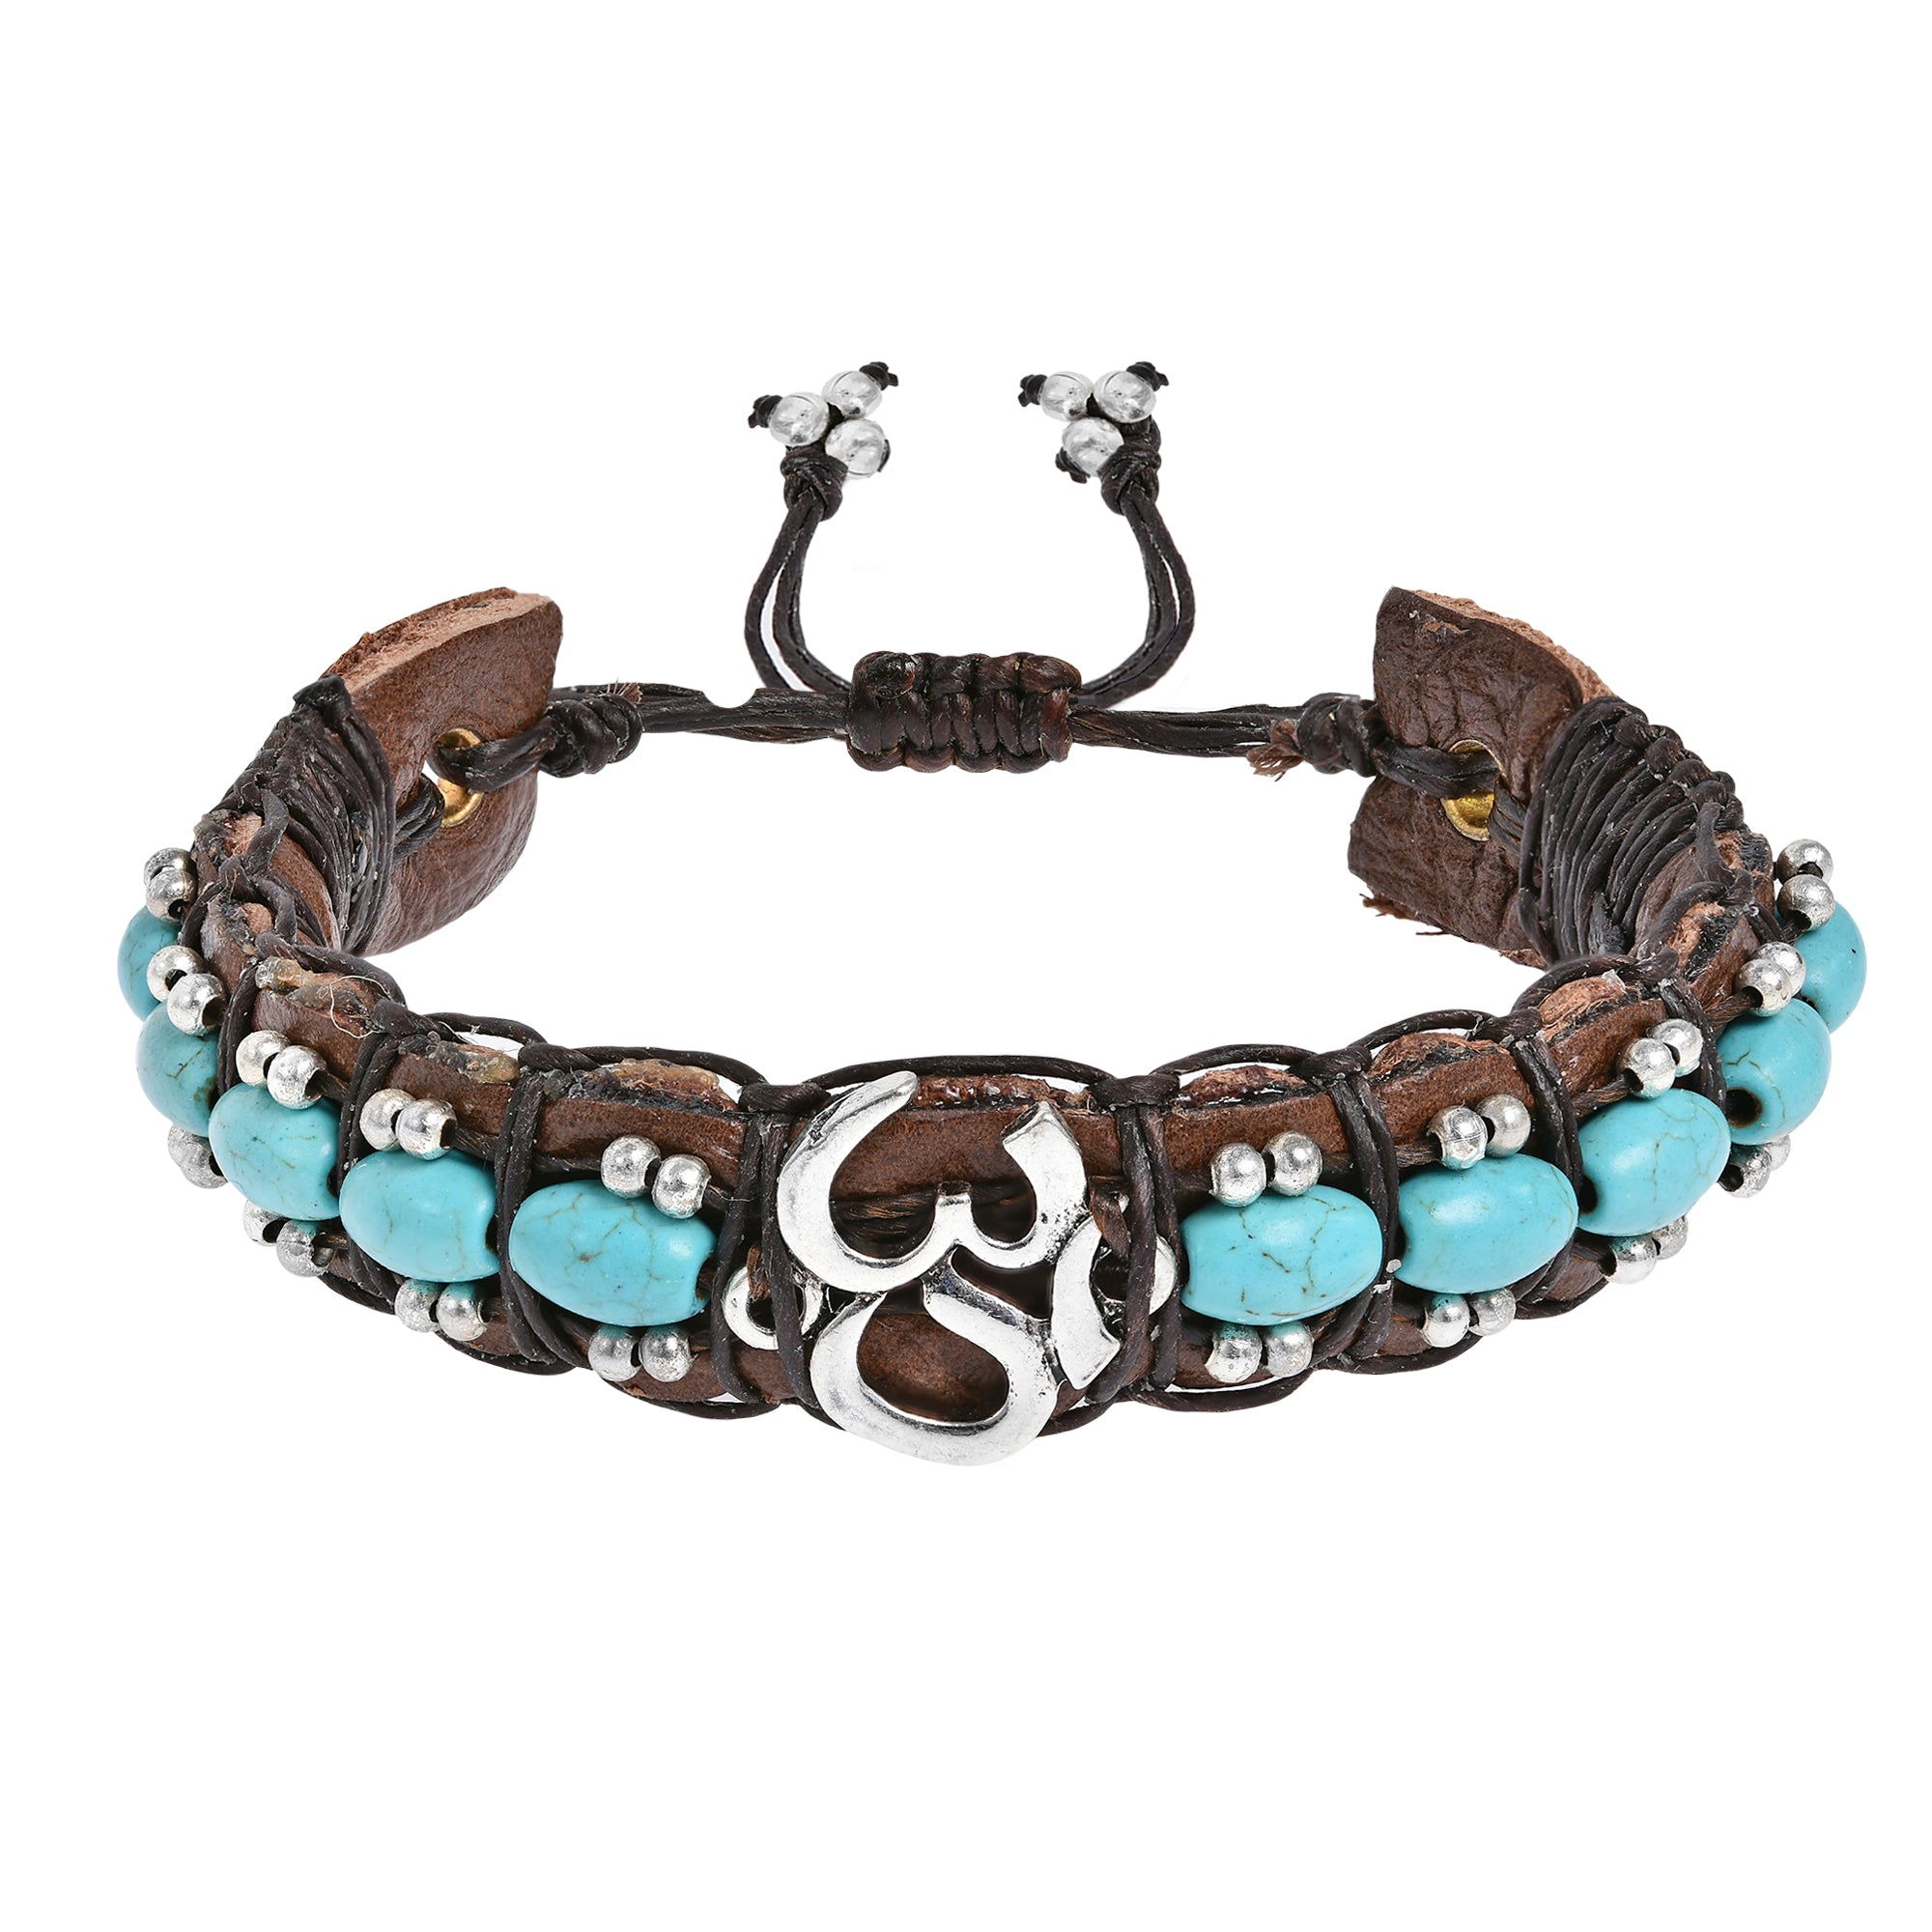 Handcrafted Mystical Meditation Aum Leather Bracelet w/ Turquoise Stones